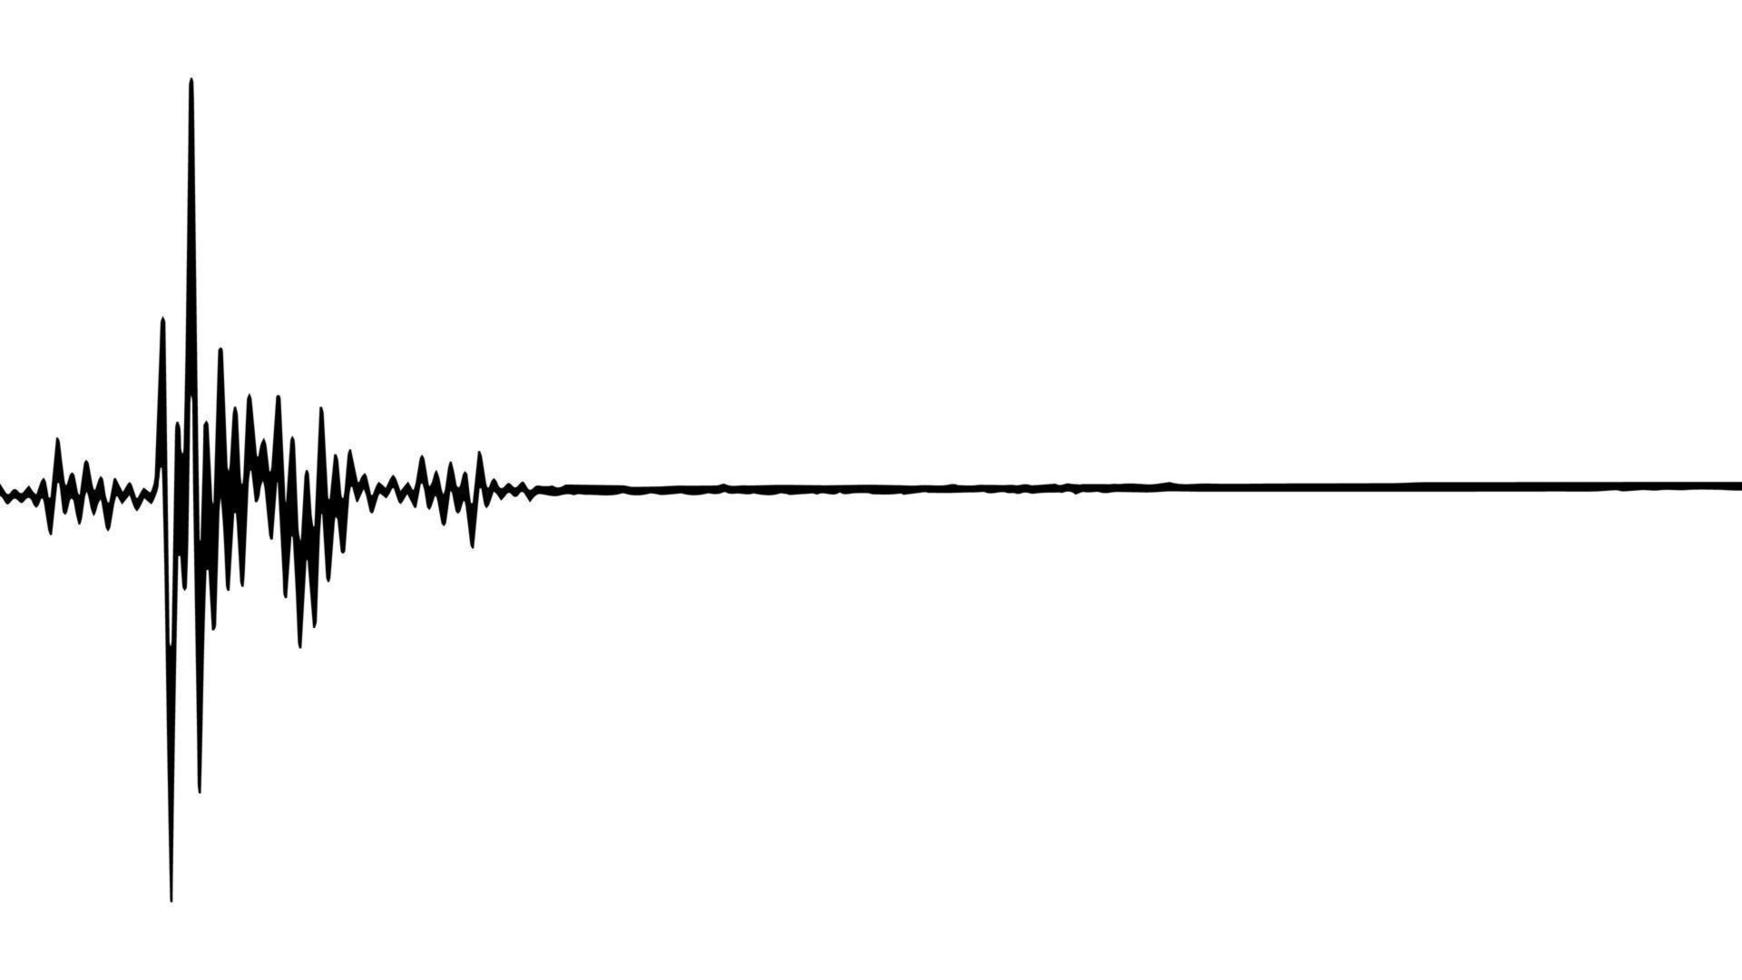 tremor de terra sísmico onda terra, terremoto sismógrafo sismologia som diagrama mais rico vetor